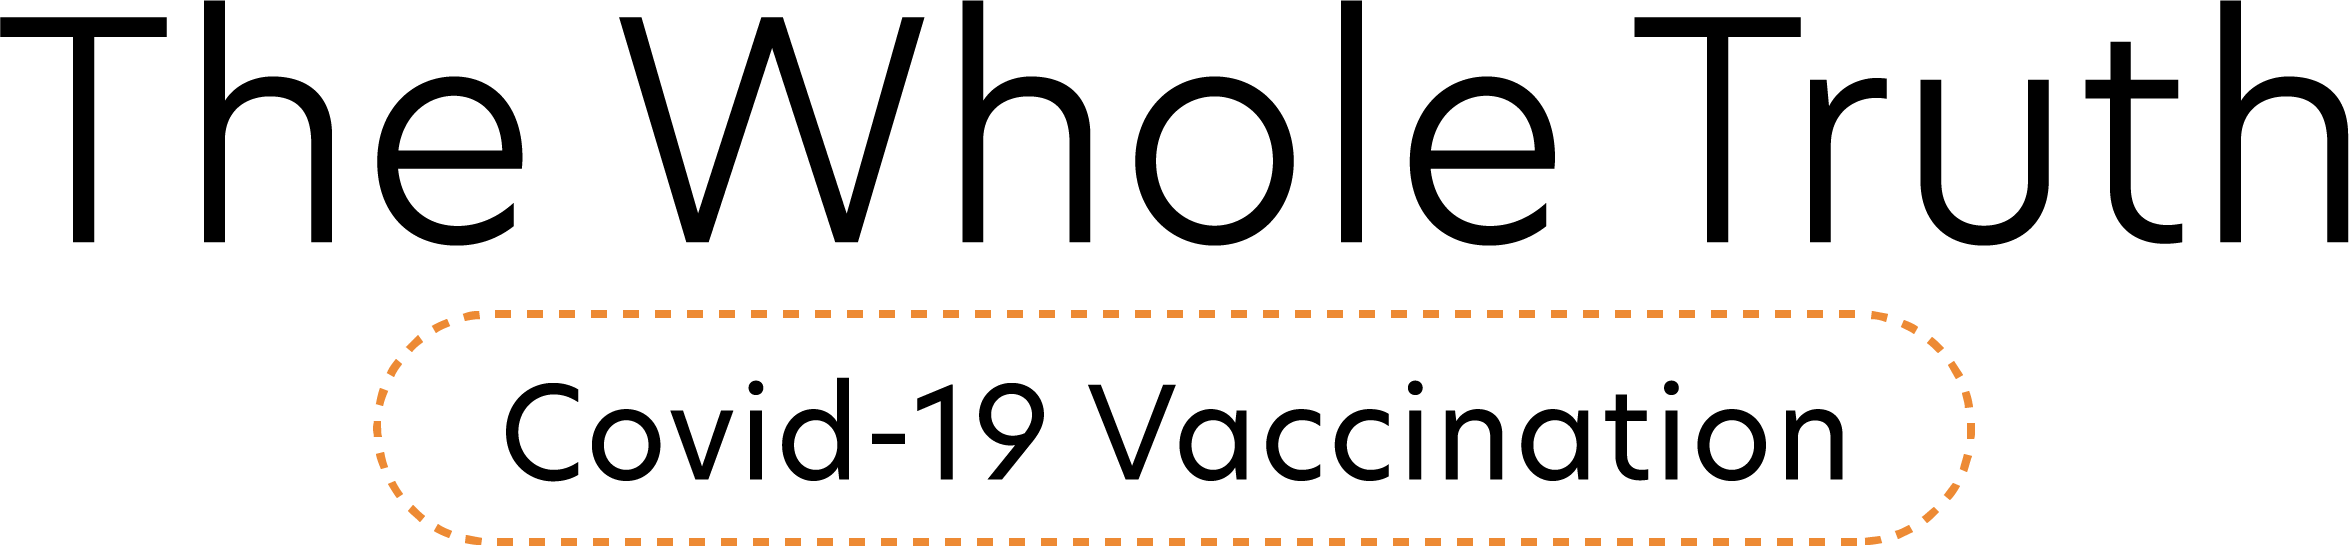 The Whole Truth Covid-19 vaccination logo